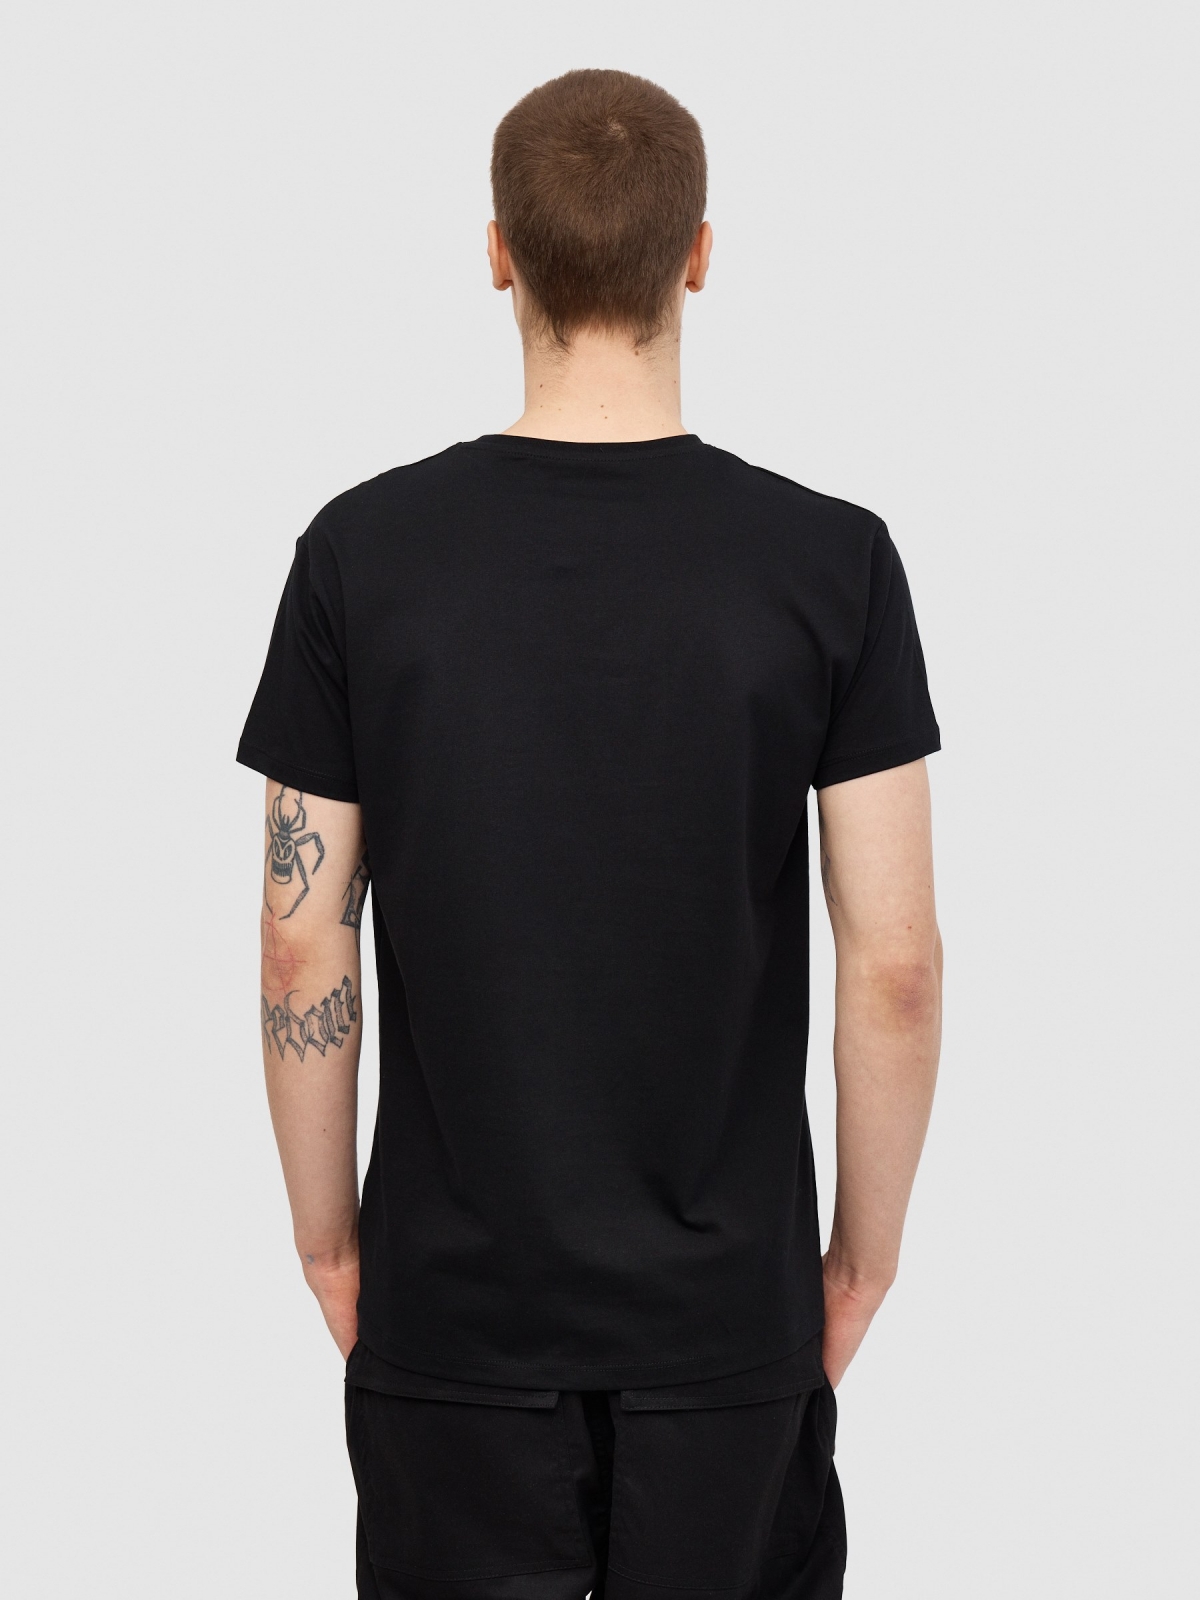 Camiseta Naruto texto negro vista media trasera